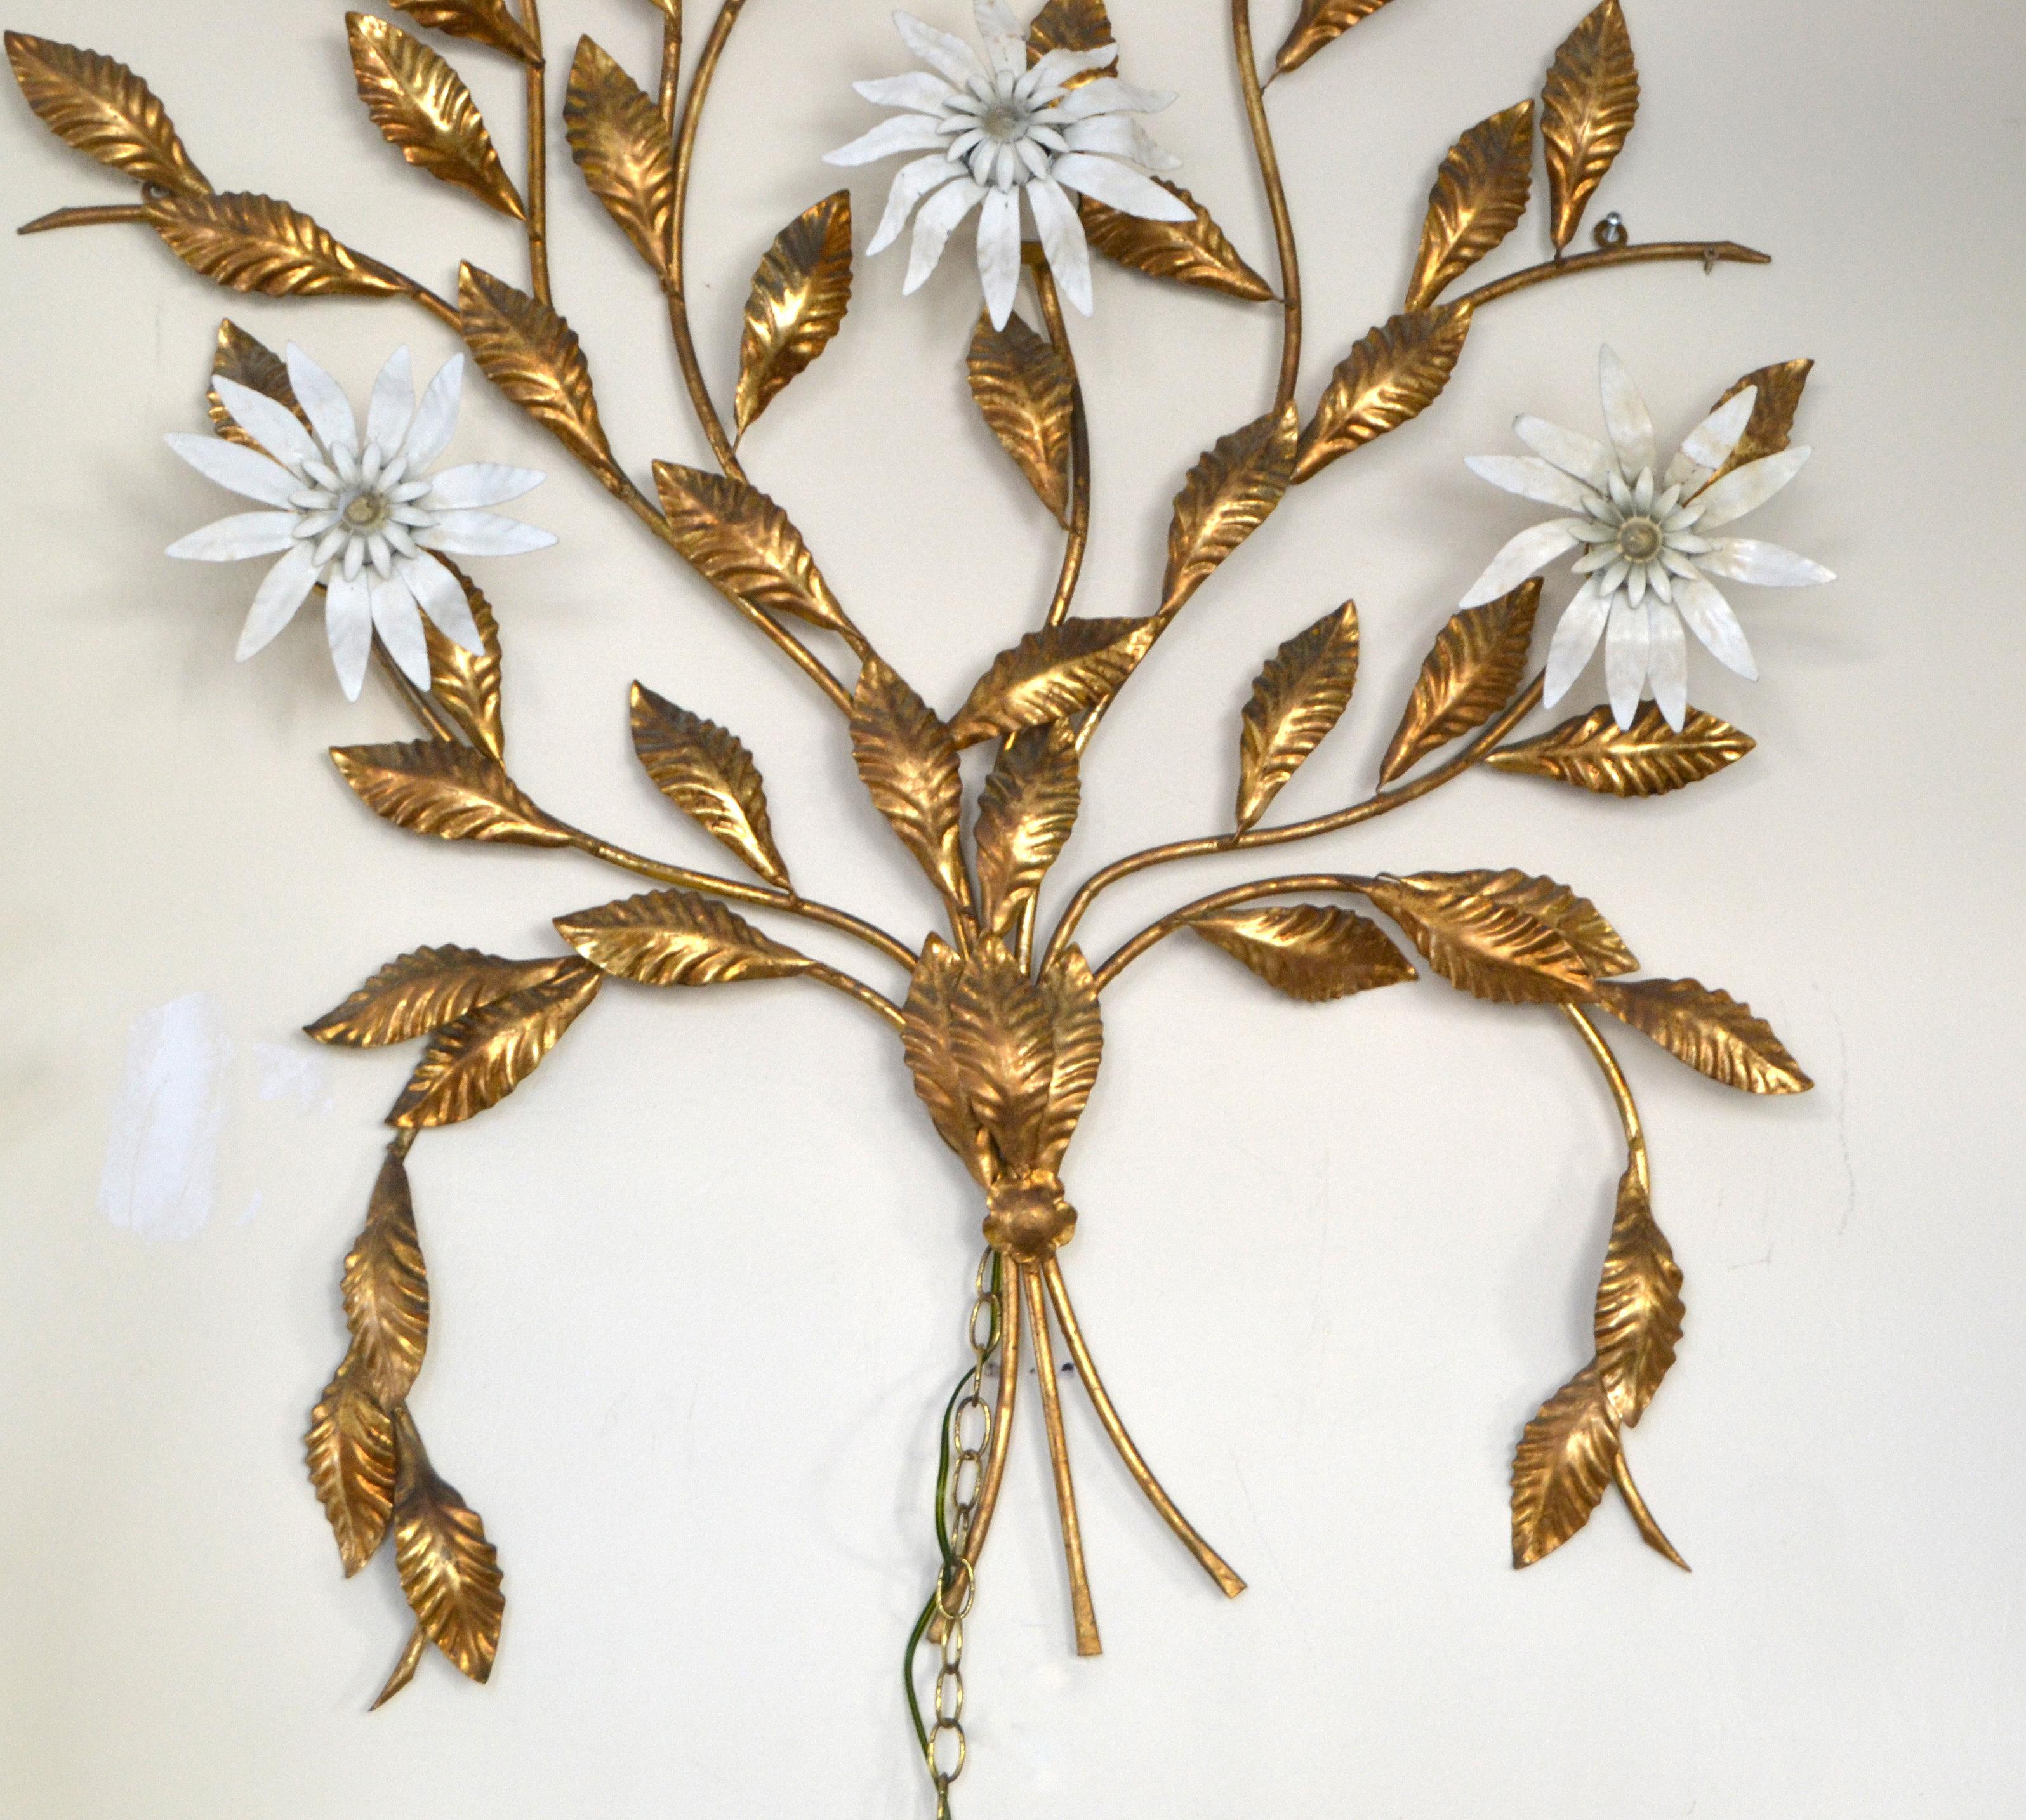 Vintage Golden Metal Tree Branch Wall Sculpture with 5 Flower Lights 4